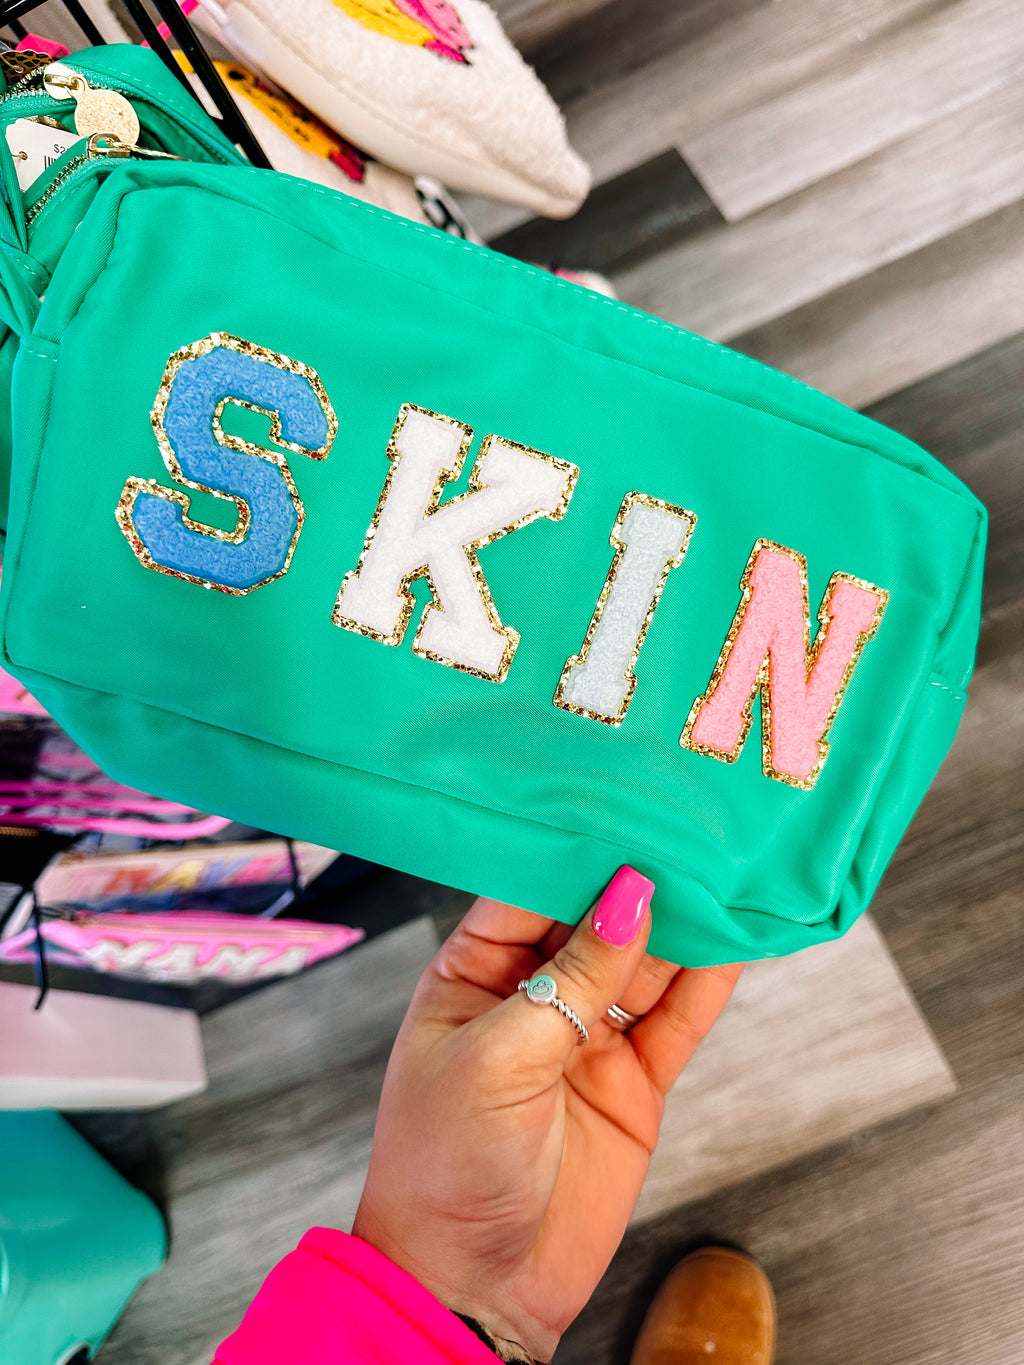 Green “Skin” Patch Bag